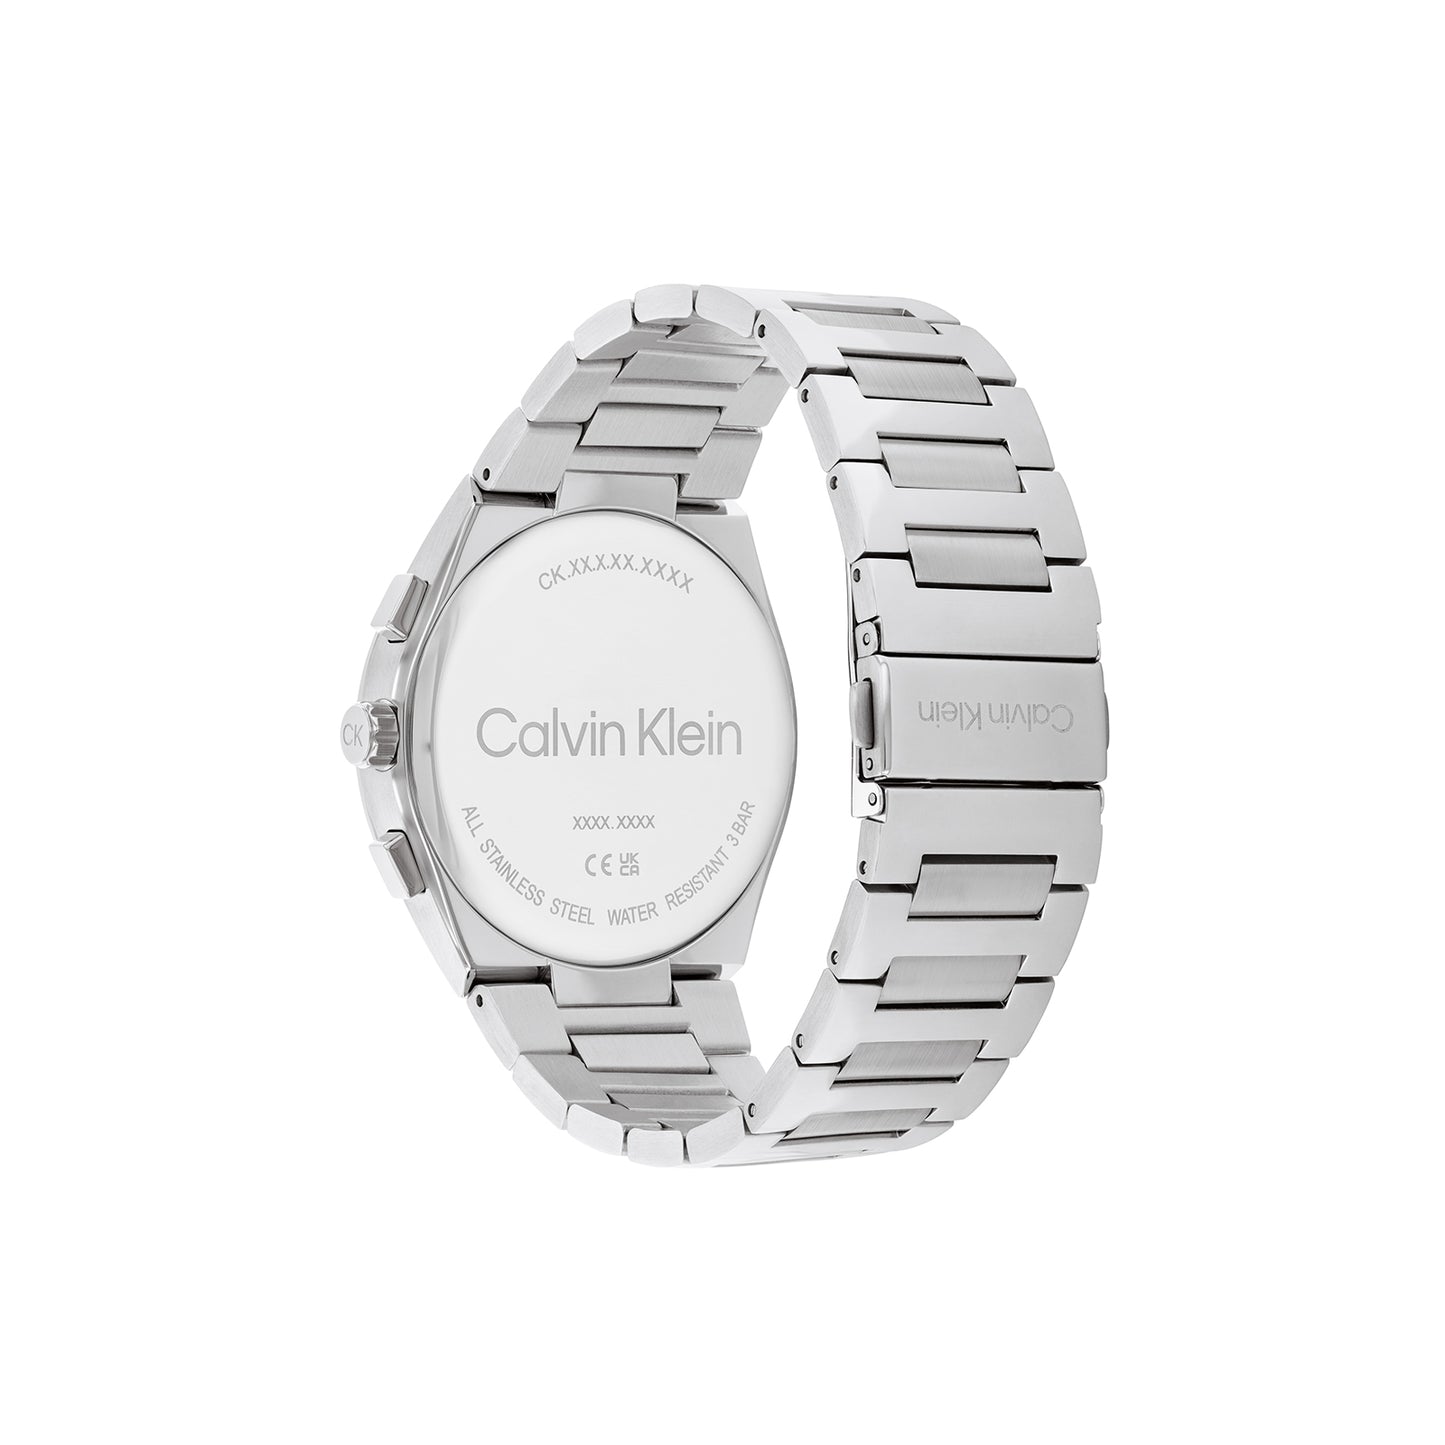 Calvin Klein 25200441 Men's Steel Watch